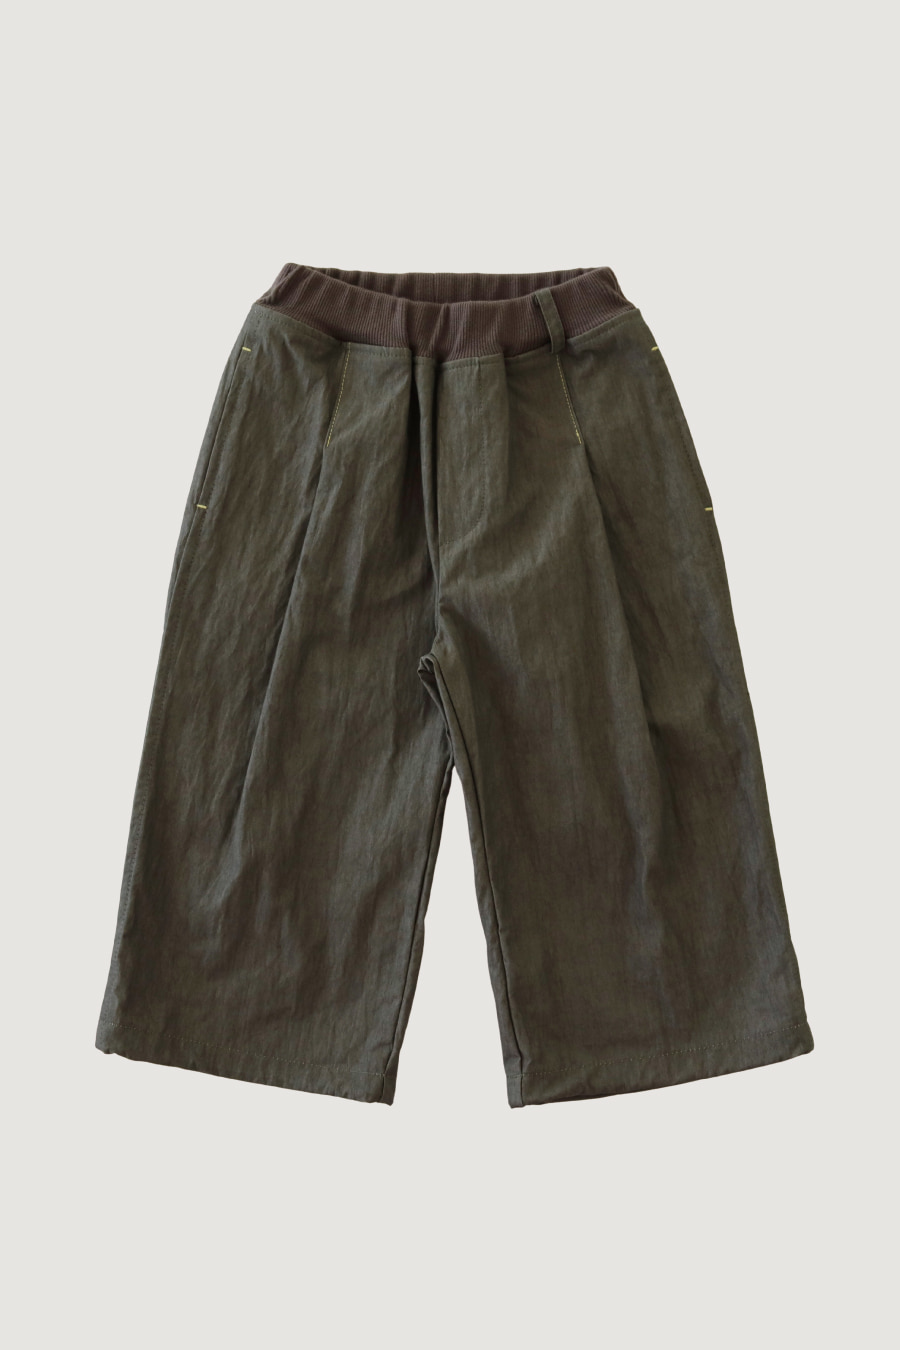 Stone stitch wide string pants (Khaki)